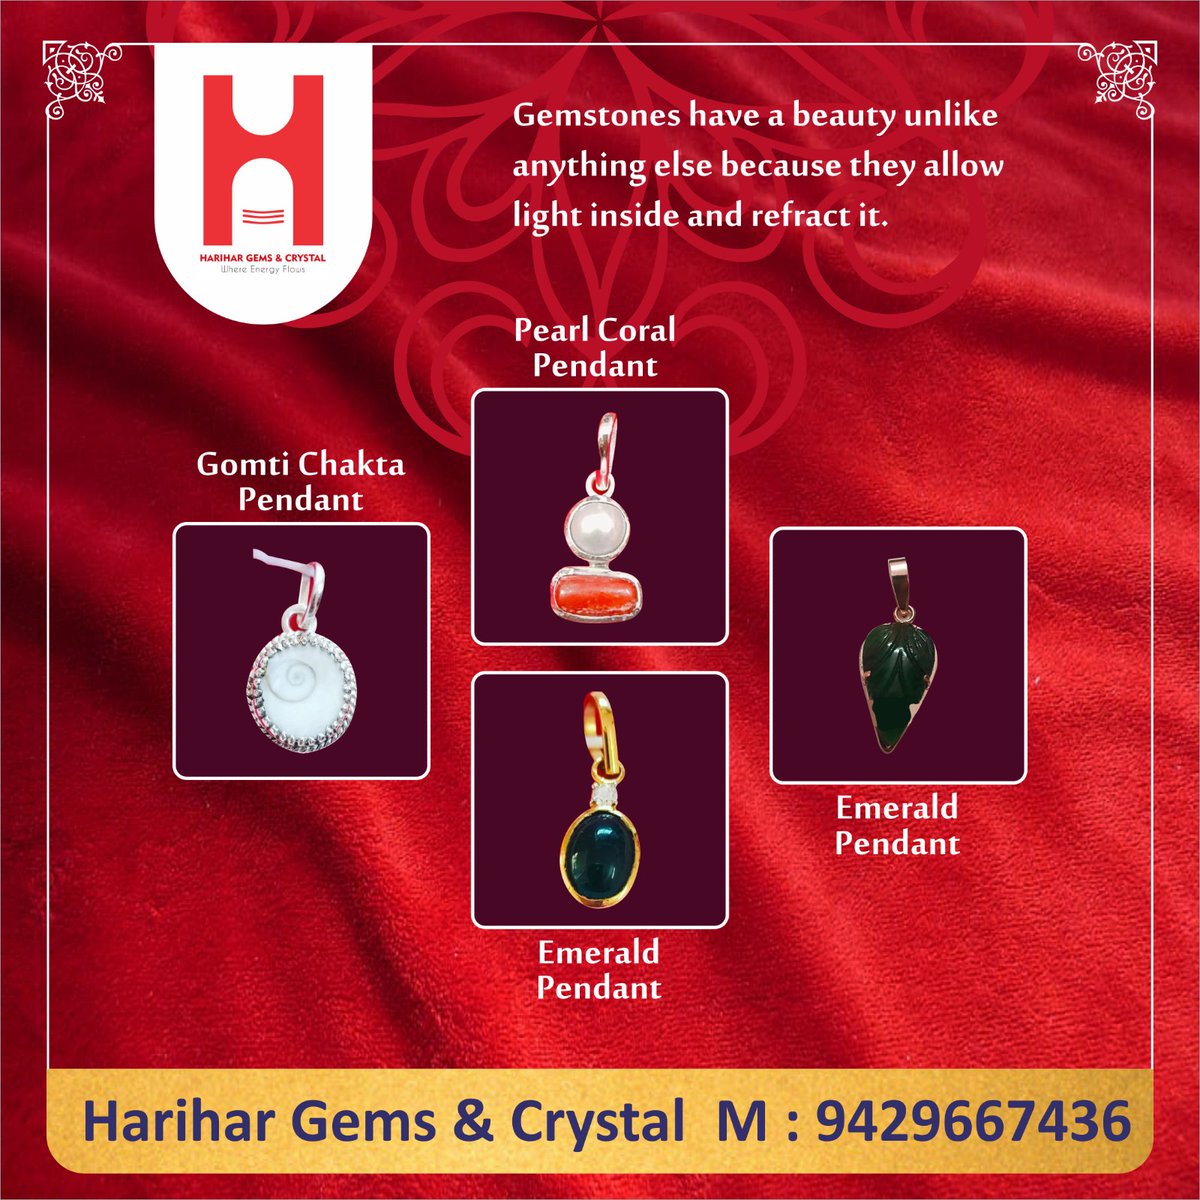 𝐆𝐞𝐦𝐬𝐭𝐨𝐧𝐞𝐬 have a beauty unlike 𝐚𝐧𝐲𝐭𝐡𝐢𝐧𝐠 else because they allow light 𝐢𝐧𝐬𝐢𝐝𝐞 𝐚𝐧𝐝 𝐫𝐞𝐟𝐫𝐚𝐜𝐭 𝐢𝐭.

#harihargems #harihargemscrystals #gemstones #pearlcoral #gomtichakta #pendant #sapphire #emerald #emeraldpendant #crystals #ahmedabad #gujrat #india